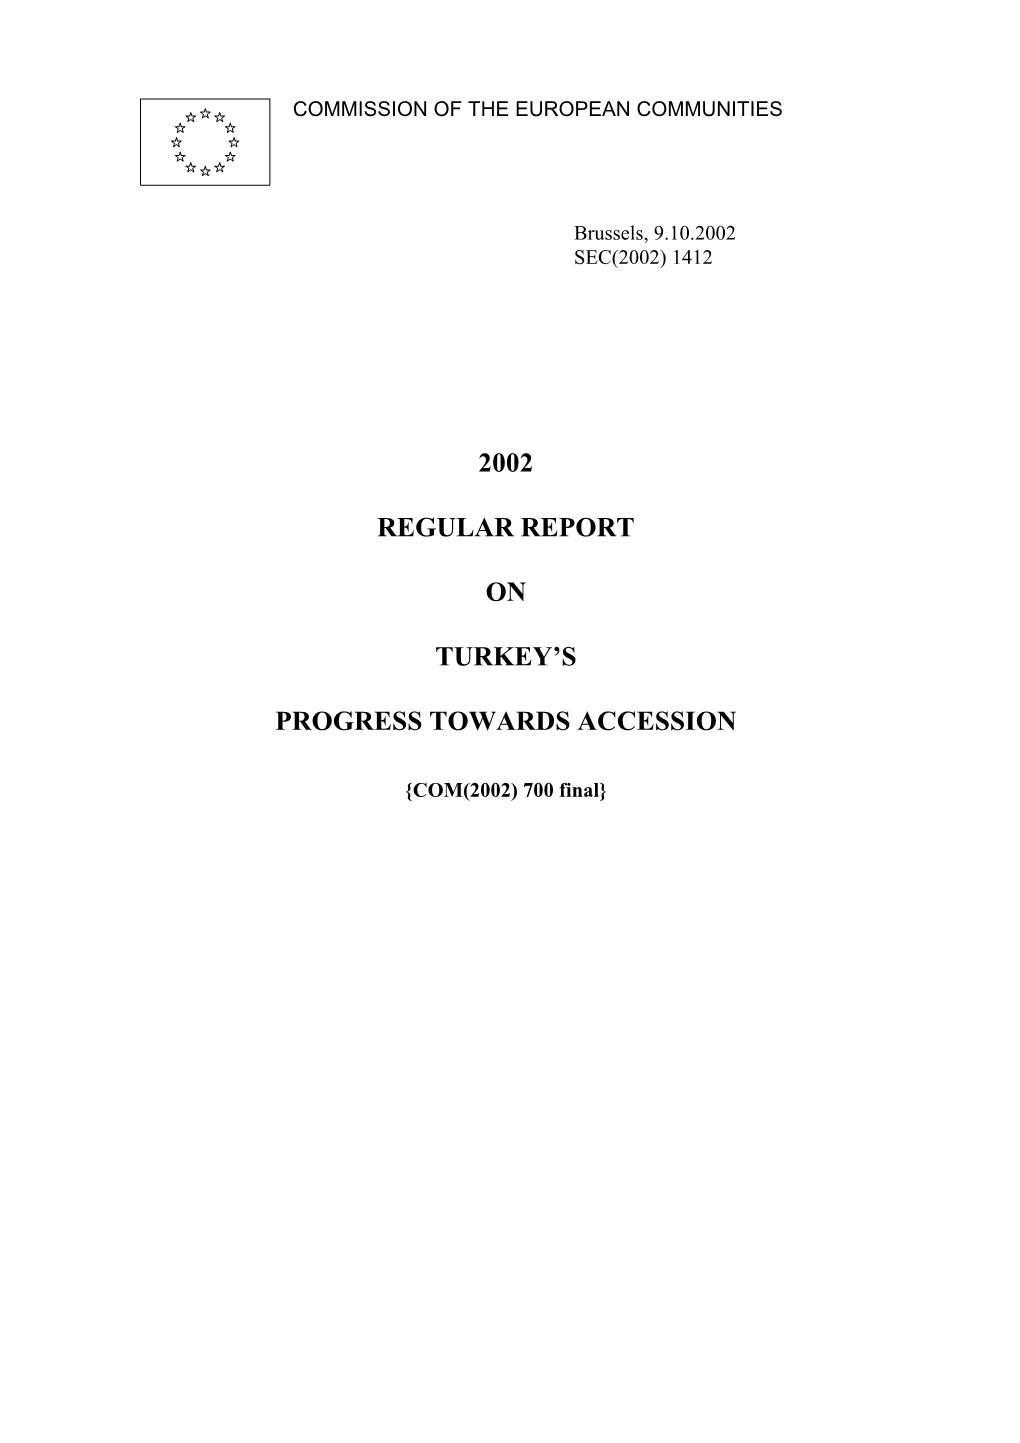 2002 Regular Report on Turkey's Progress Towards Accession